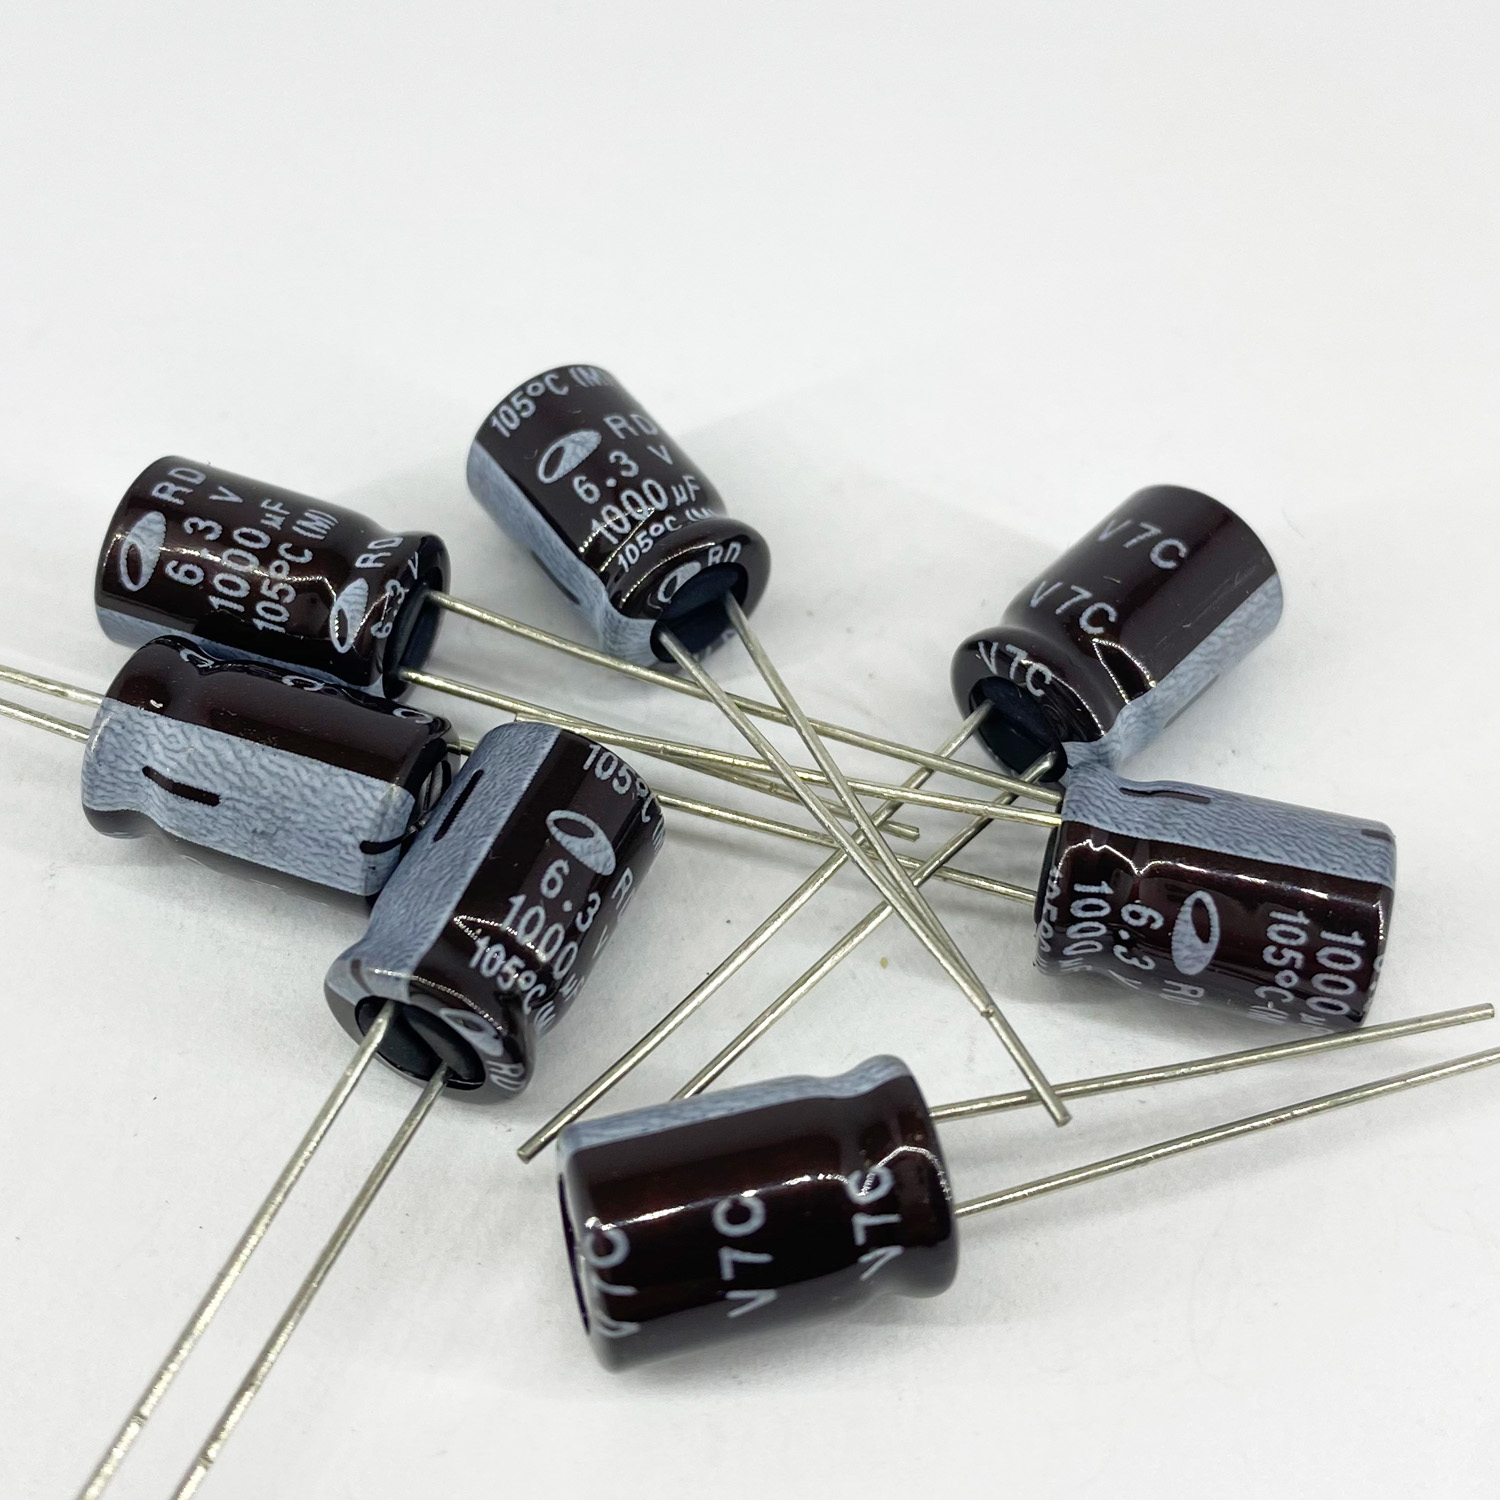 Электролитические конденсаторы 1000 мкф x 6,3 В - 8x11,5 мм 105 °C SAMWHA, фото